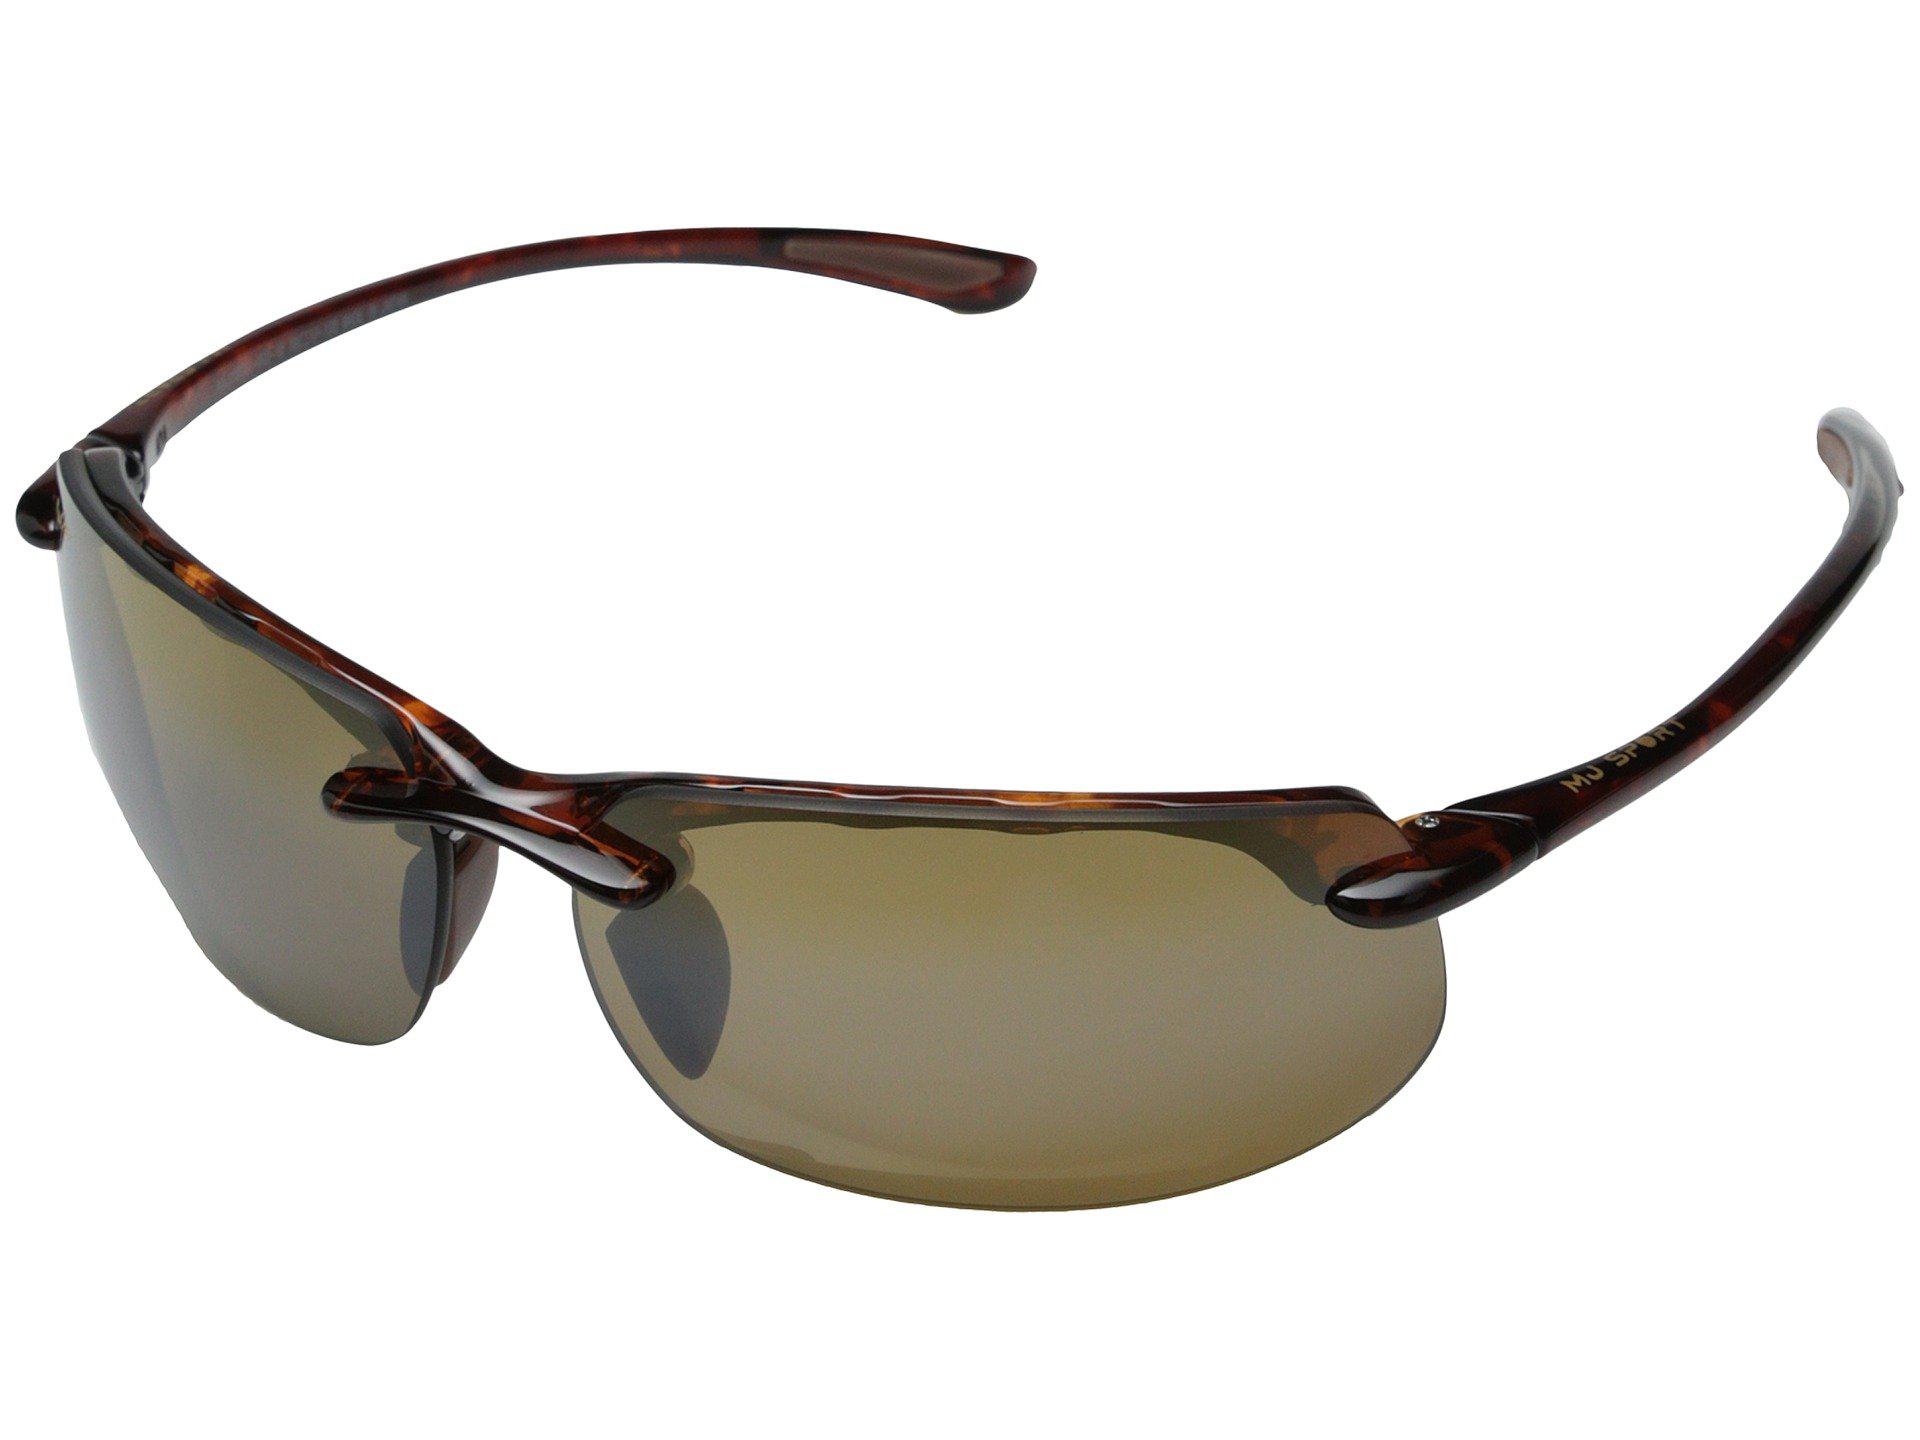 Lyst - Maui Jim Banyans (tortoise/hcl Bronze Lens) Sport Sunglasses in ...